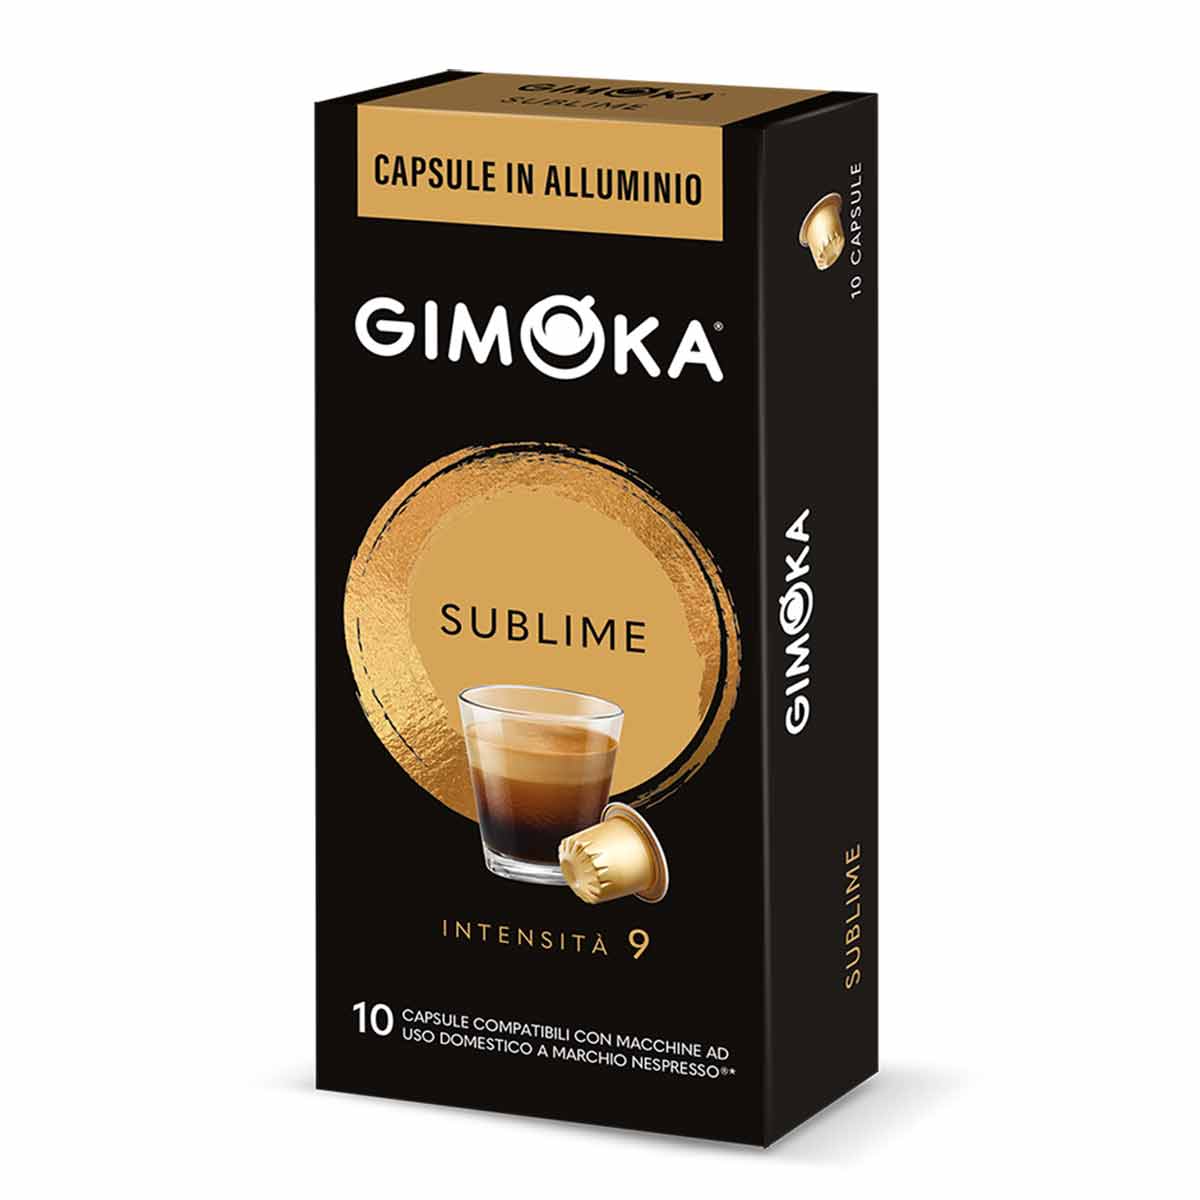 Gimoka - İtaly: Nespresso uyumlu ALUMINYUM kapsül kahve - SUBLIME  (Yoğunluk 9 - Arabica/Robusta)